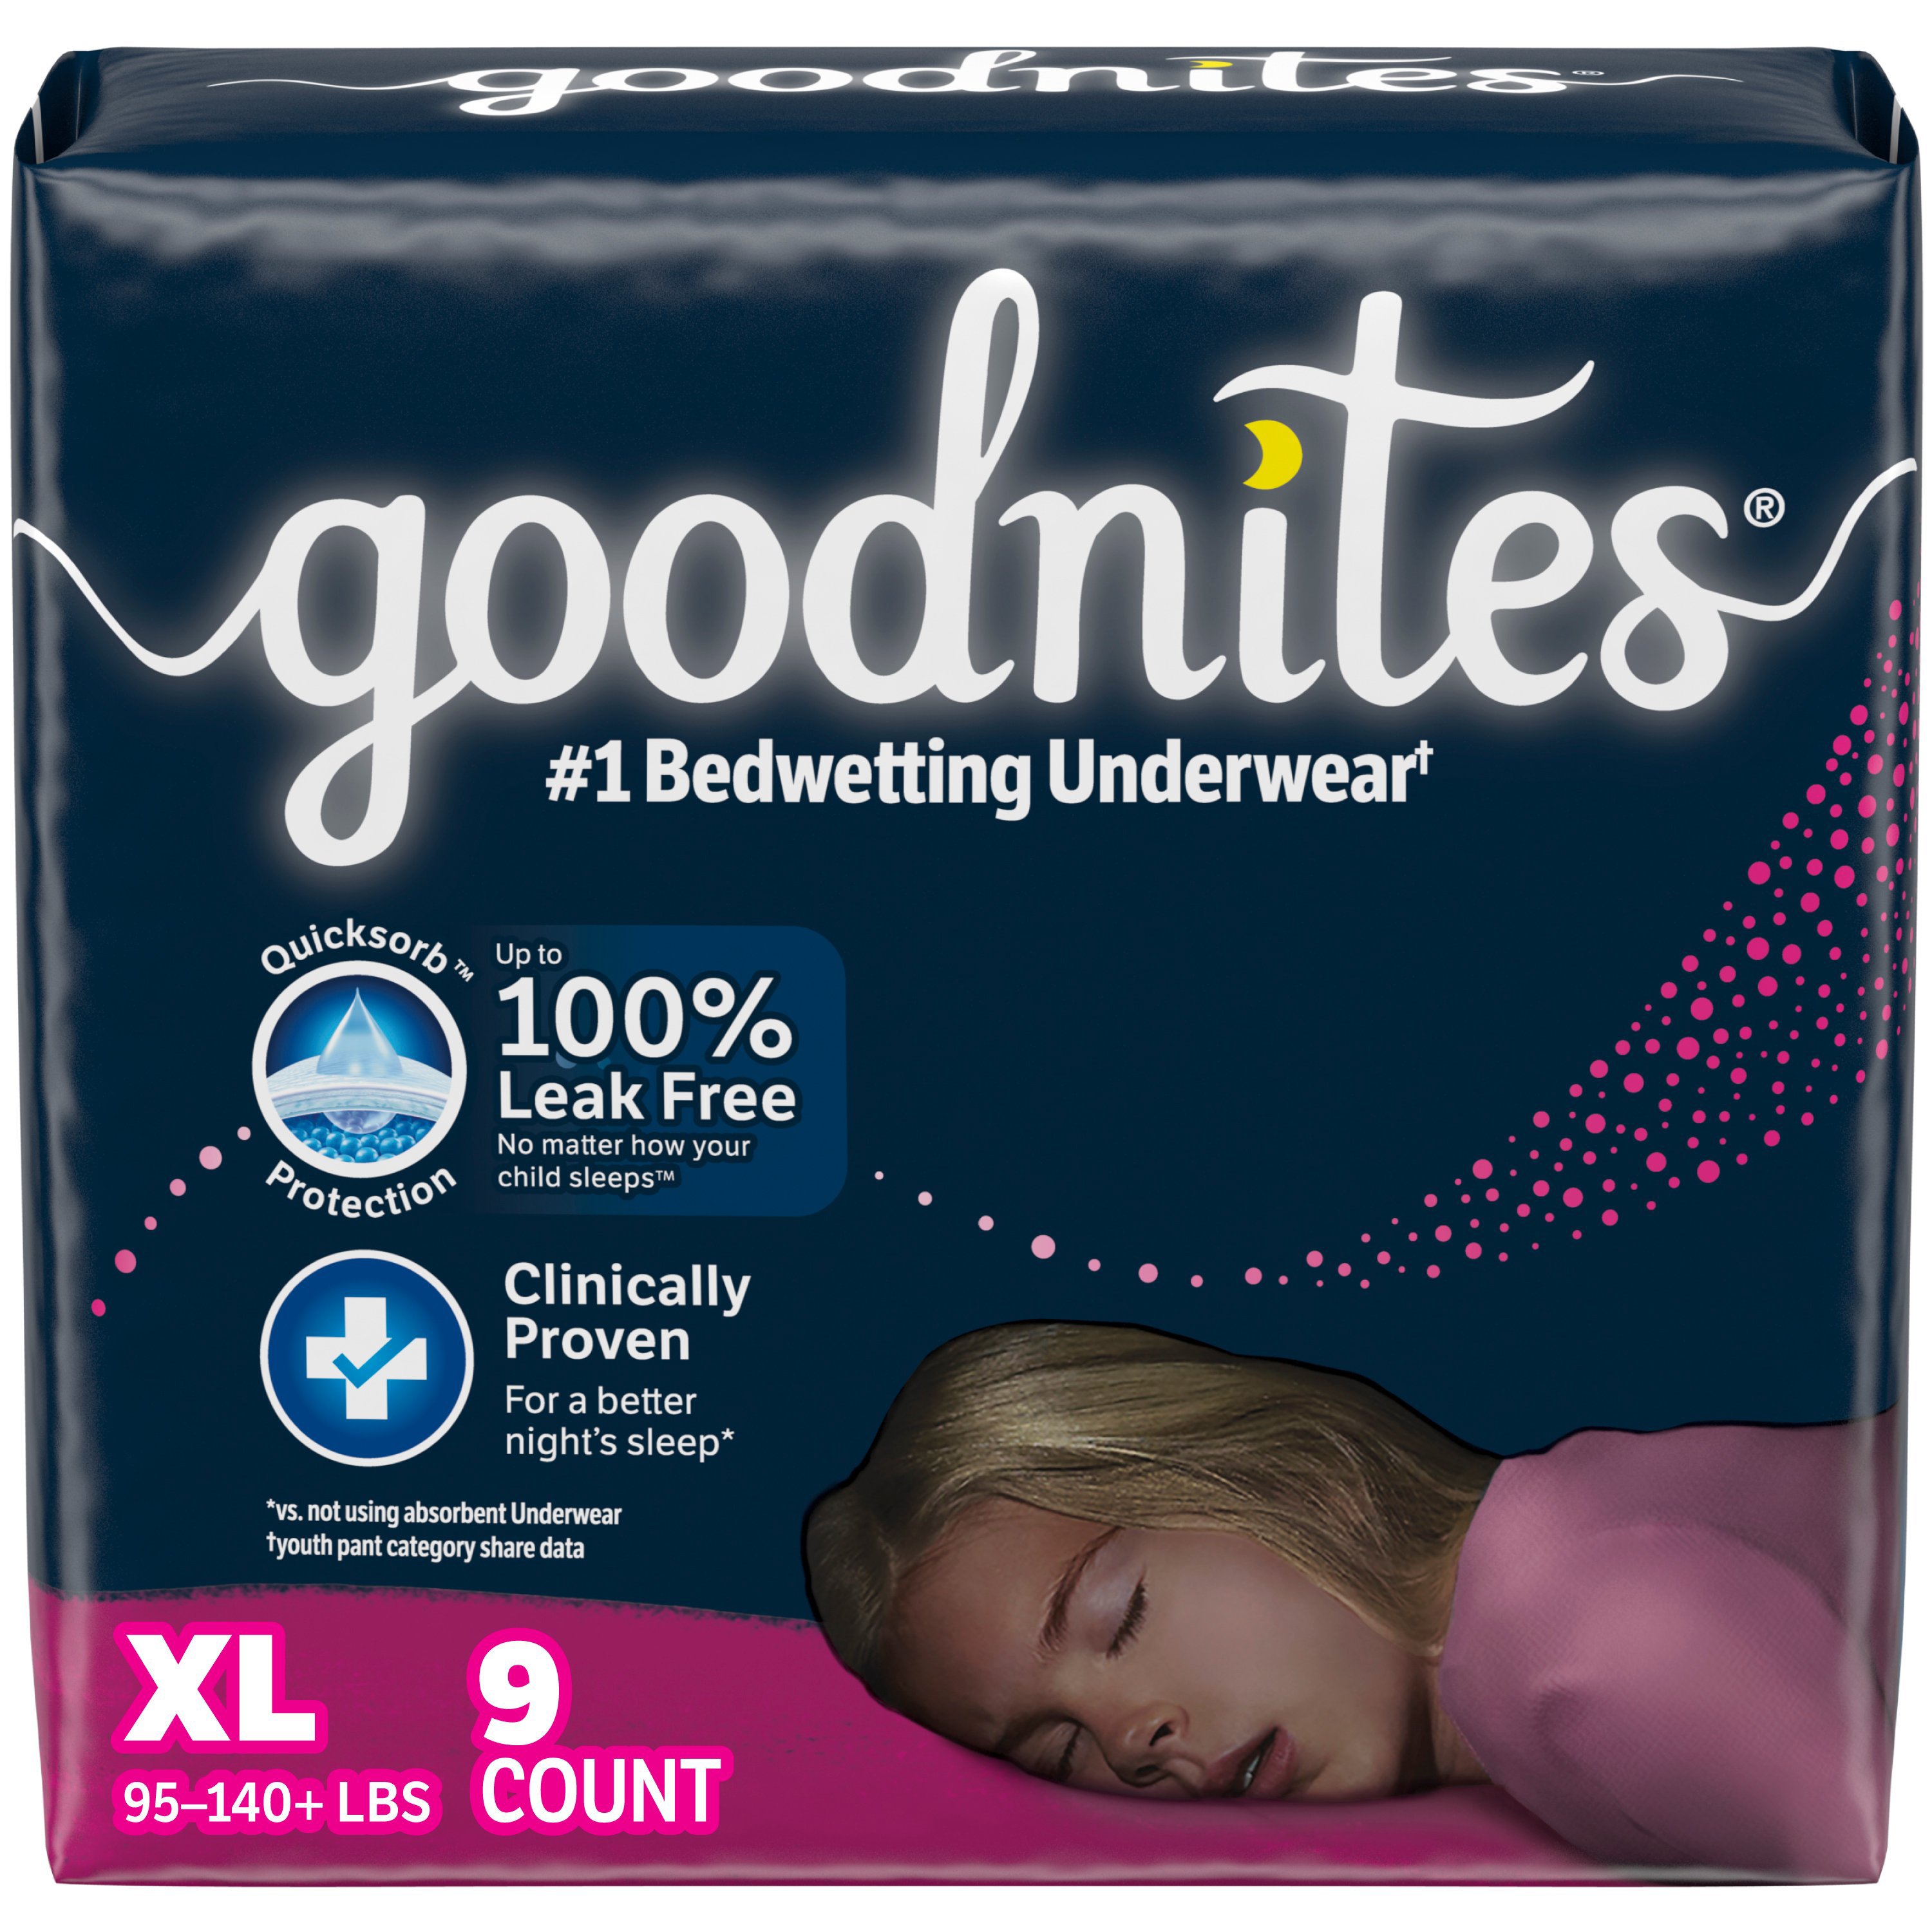 Goodnites Girls' Nighttime Bedwetting Underwear, Size S/M (43-68 lbs), 14  Ct